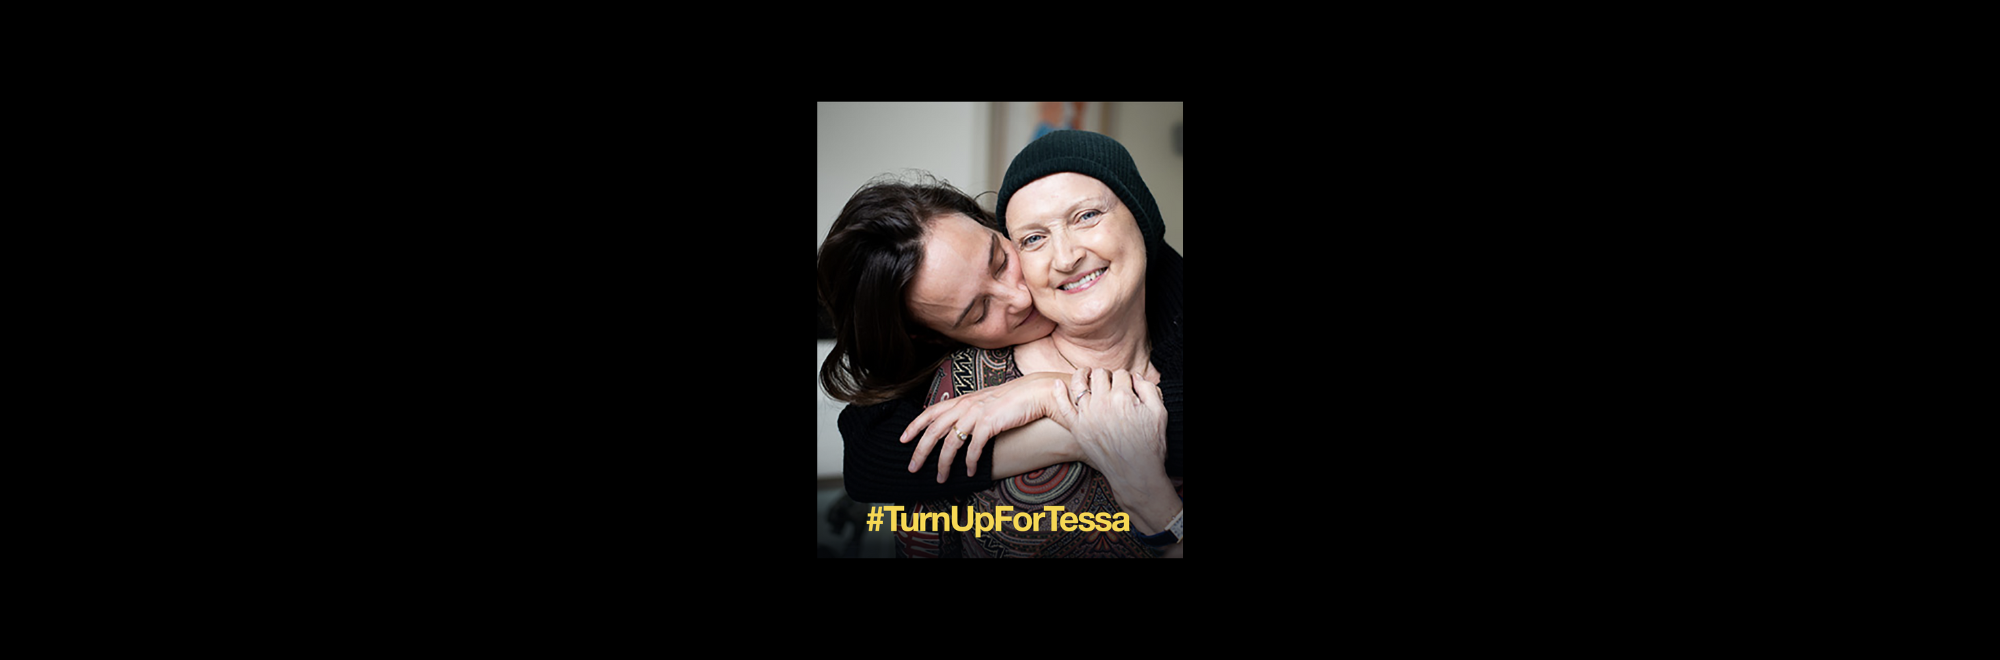 #TurnUpForTessa: The Tessa Jowell Foundation aims to transform NHS brain cancer care